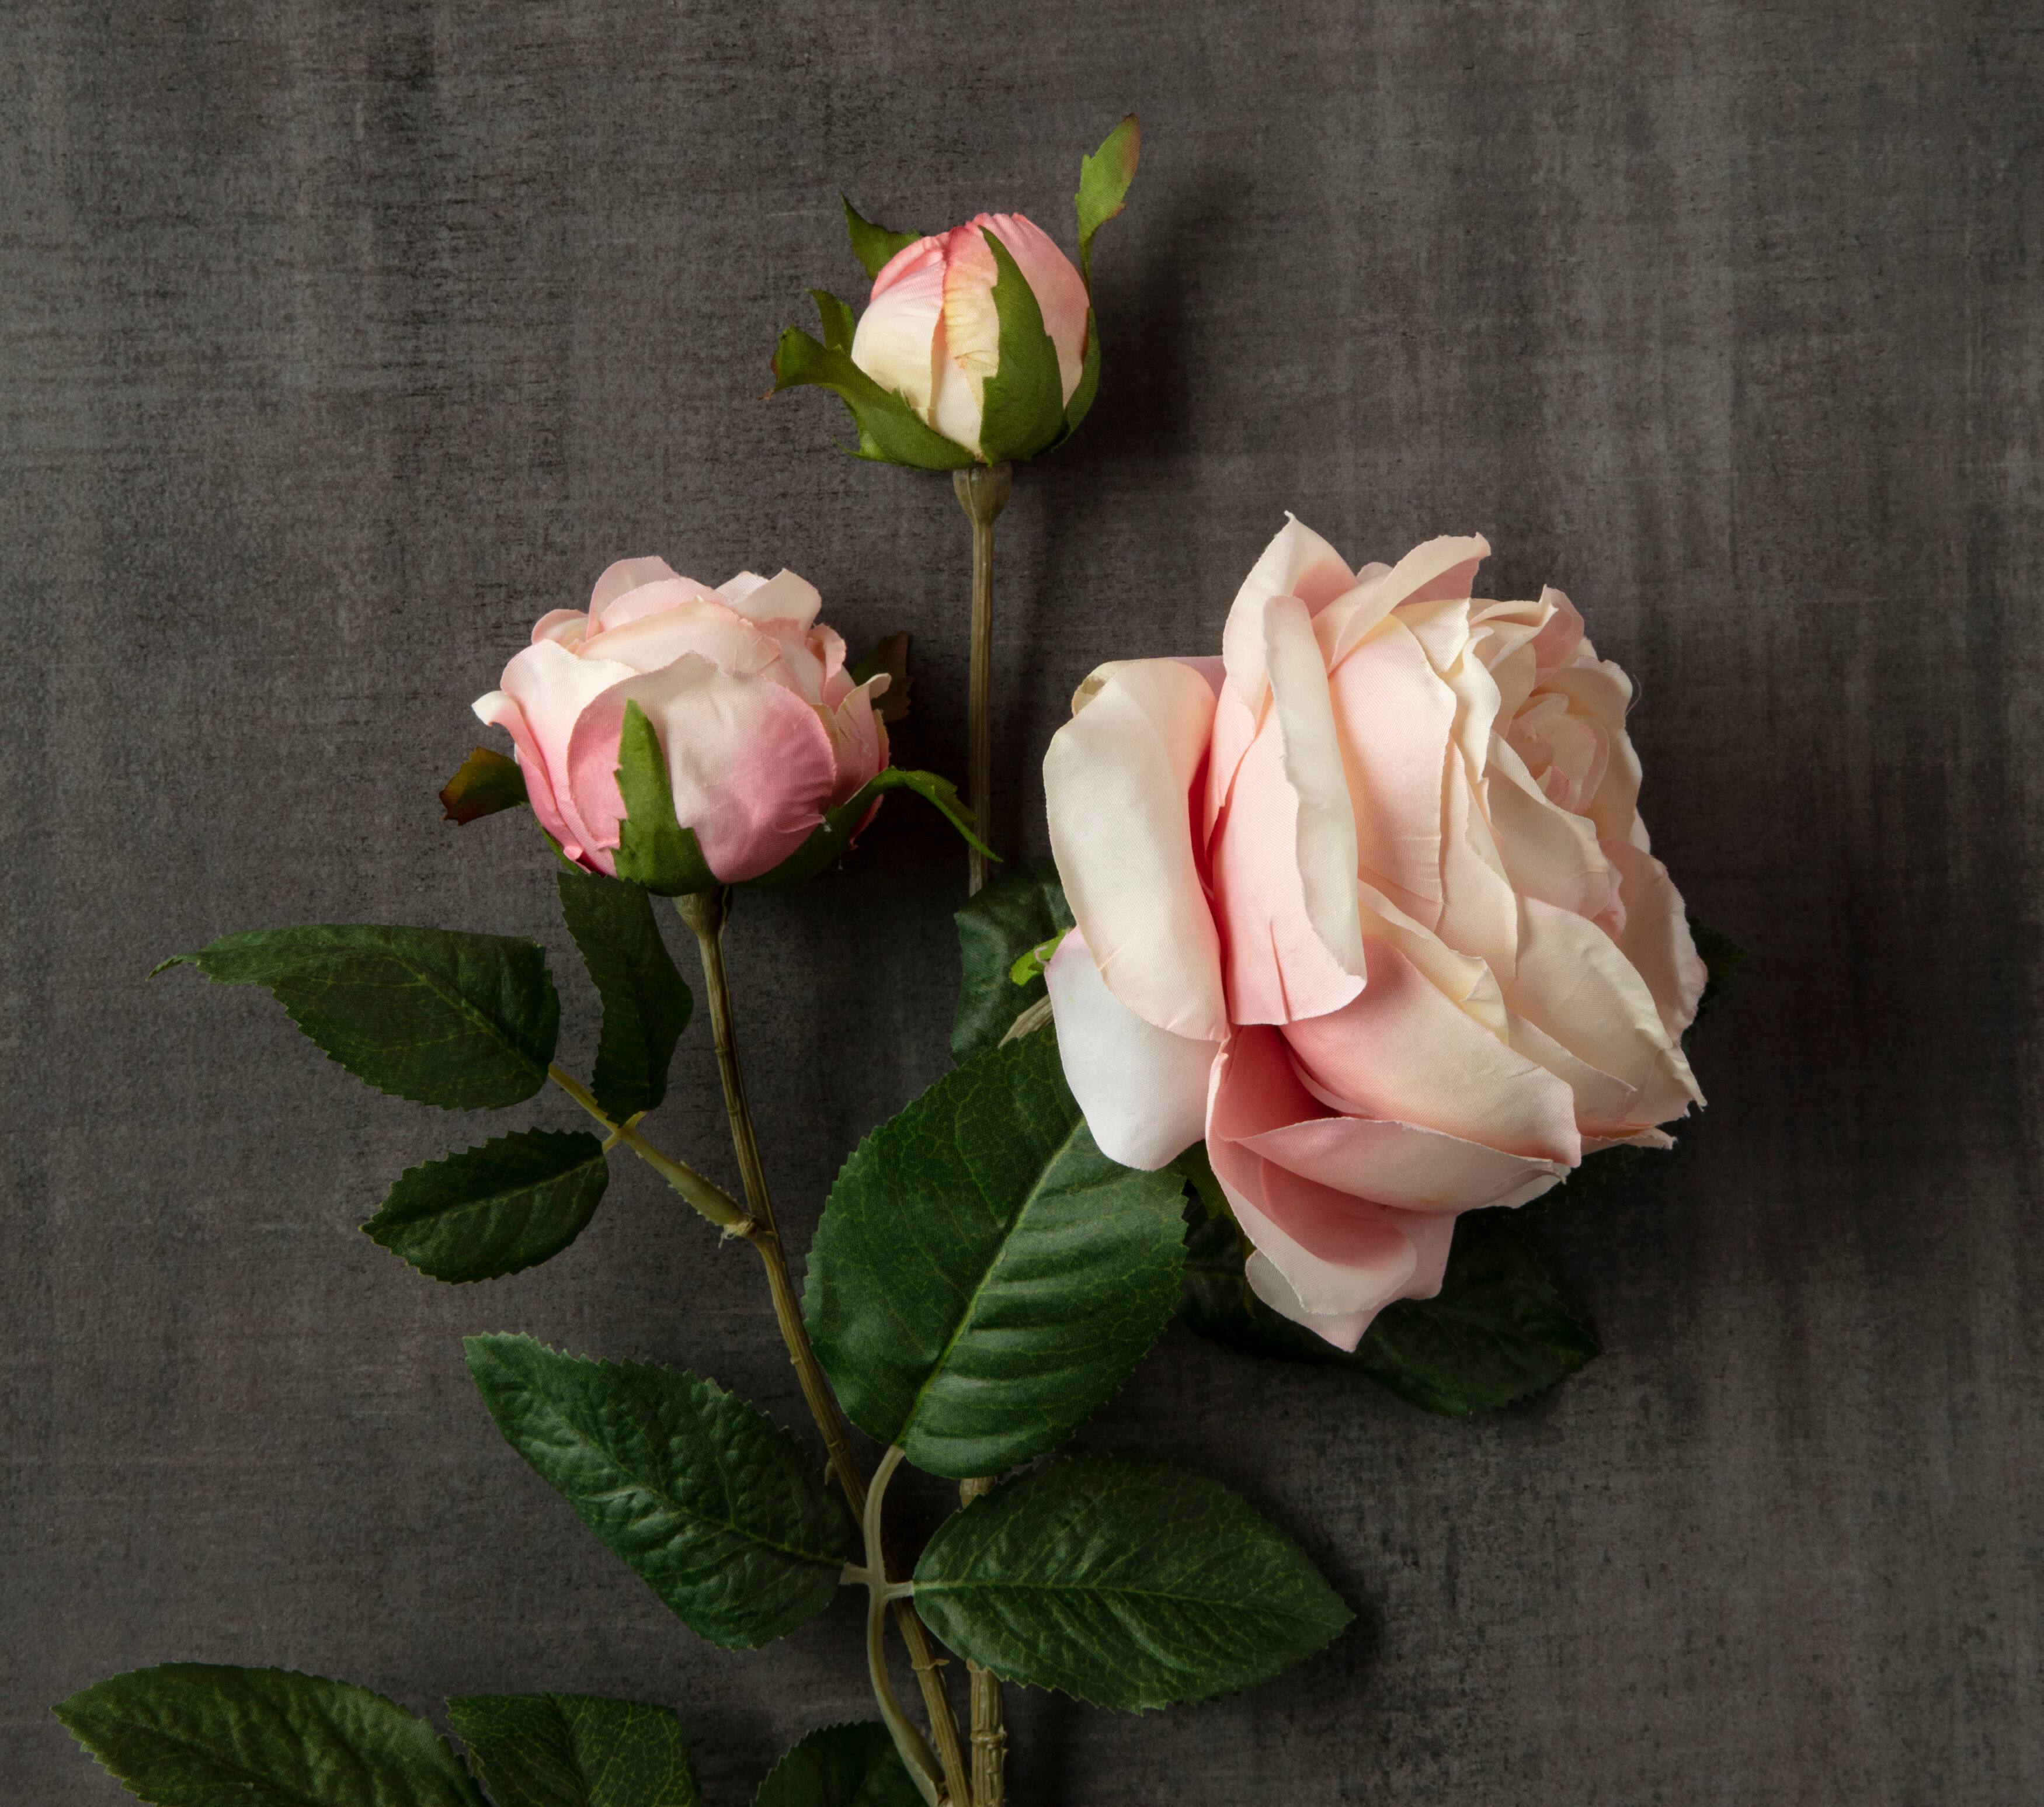 Light Pink English Rose Stem by Ashland®